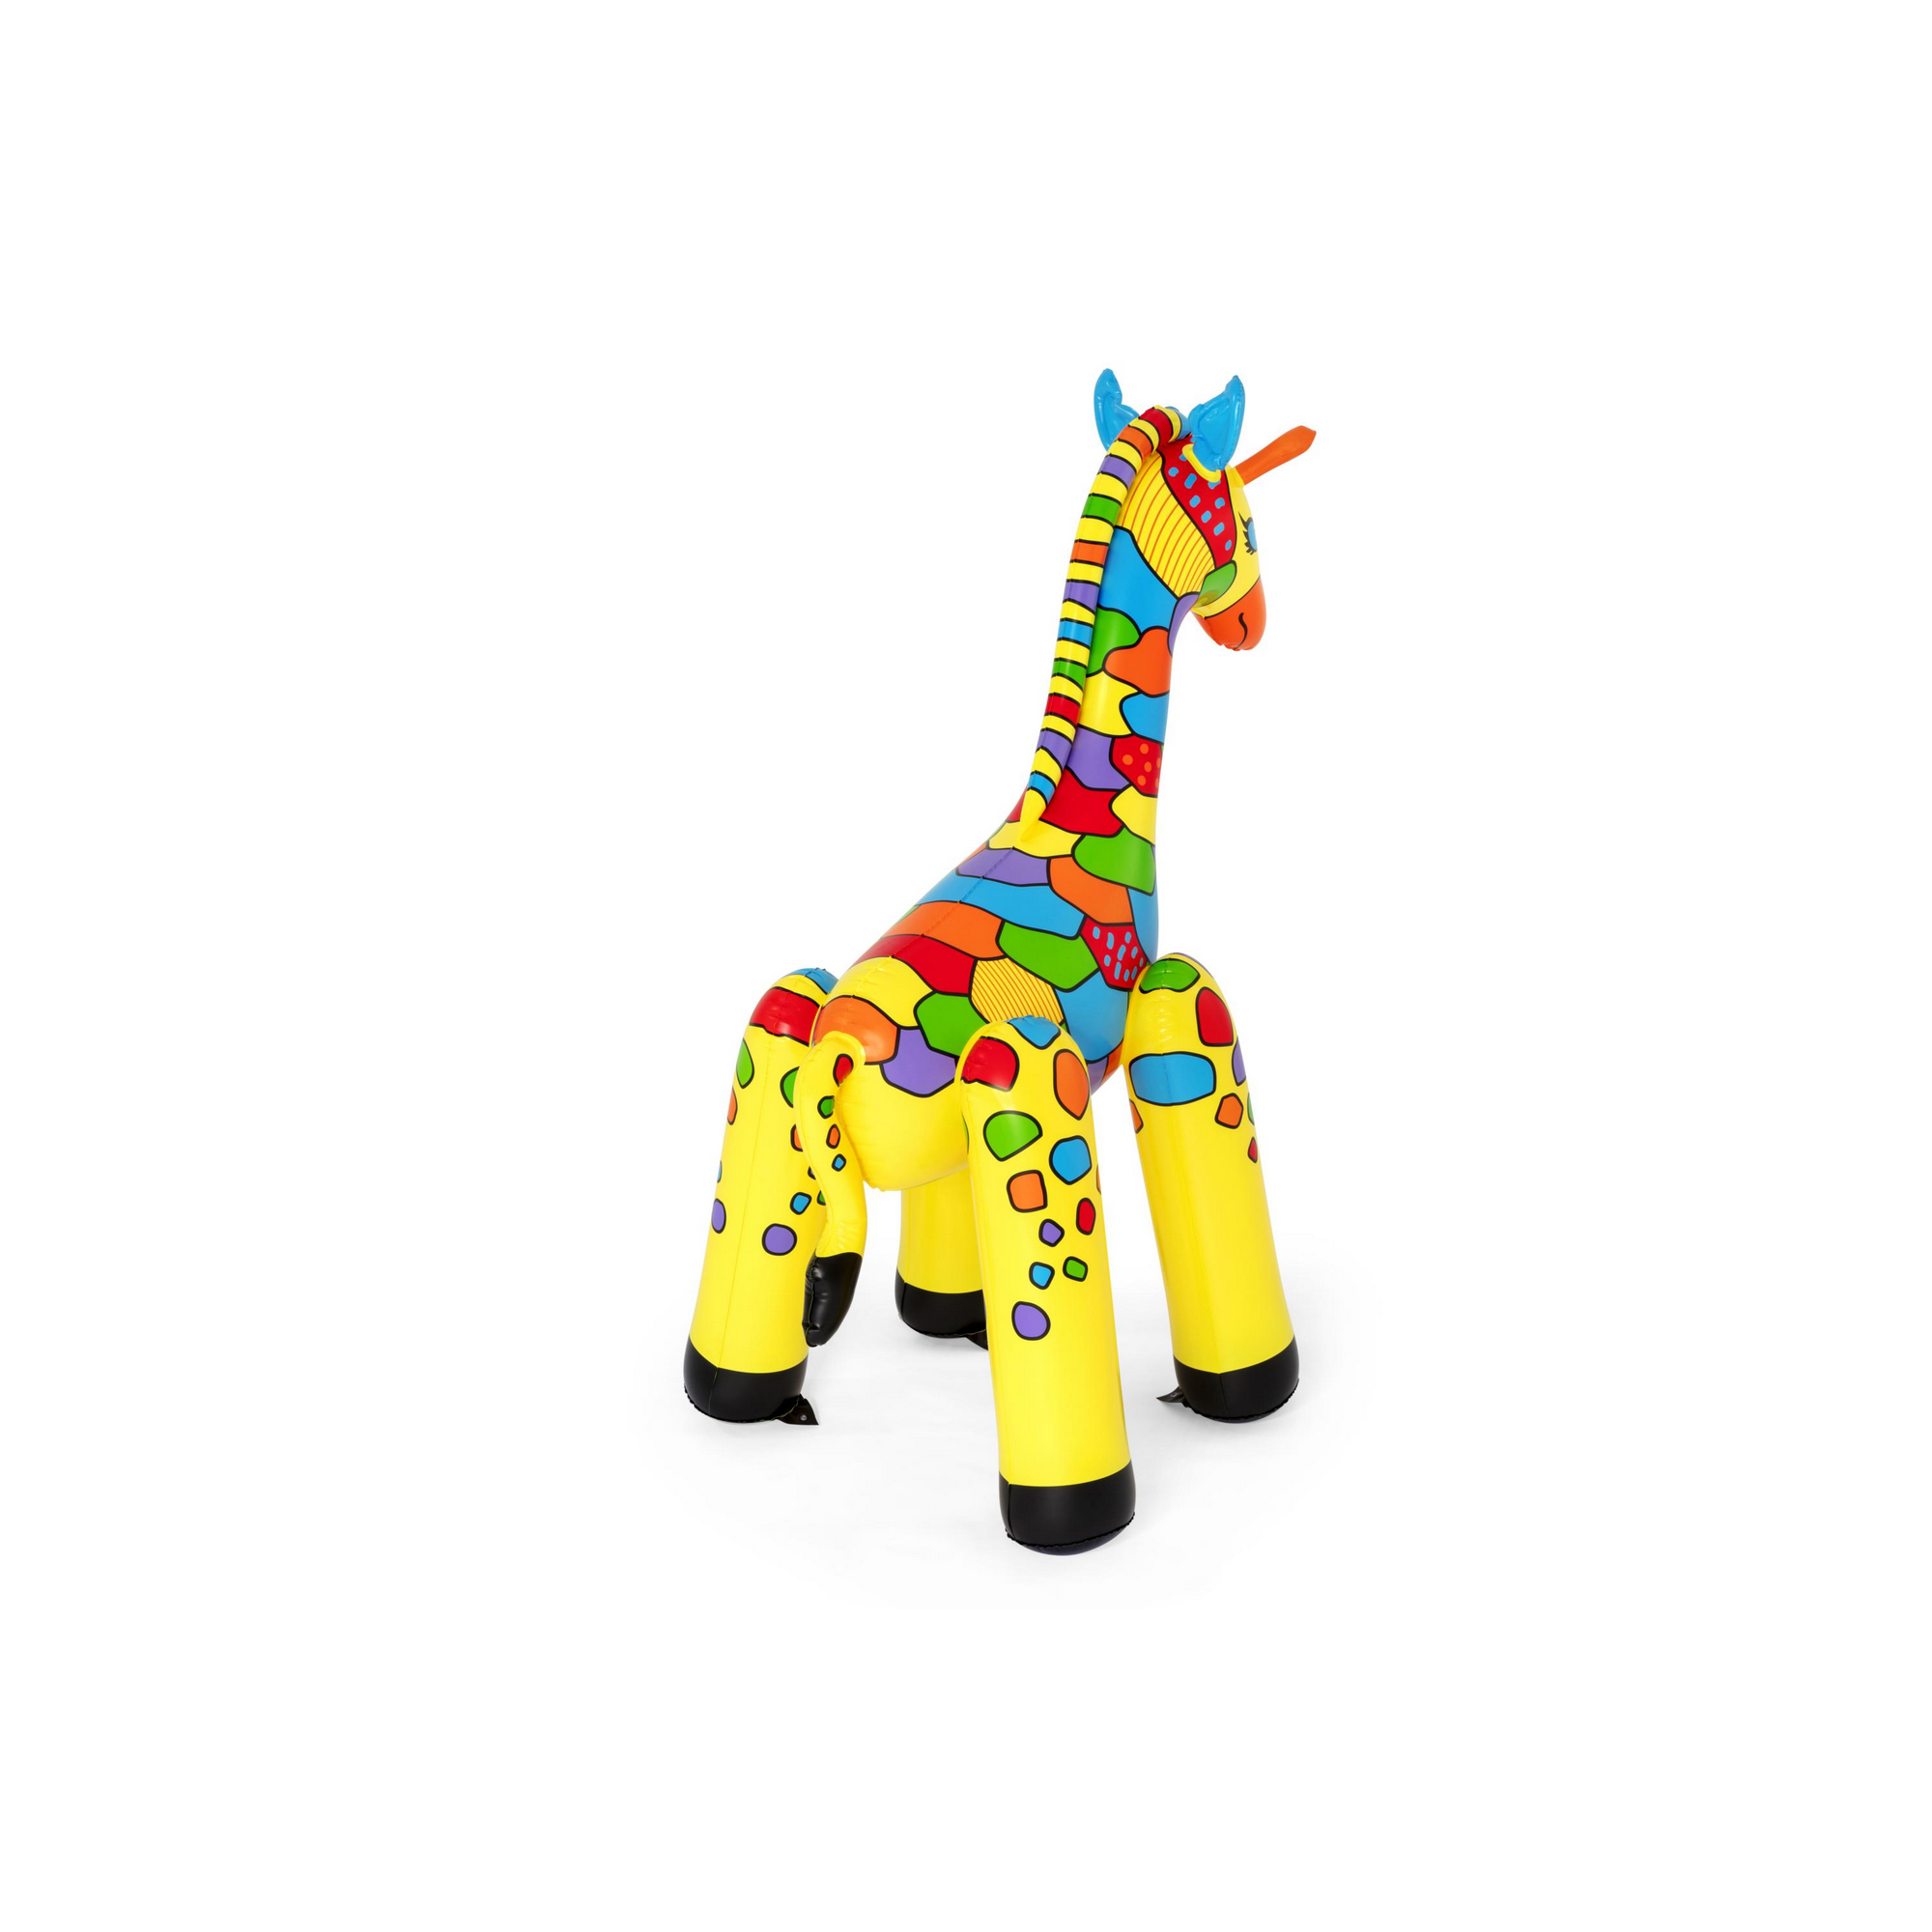 Jumbo Wassersprinkler 'Giraffe' bunt 142 x 104 x 198 cm + product picture